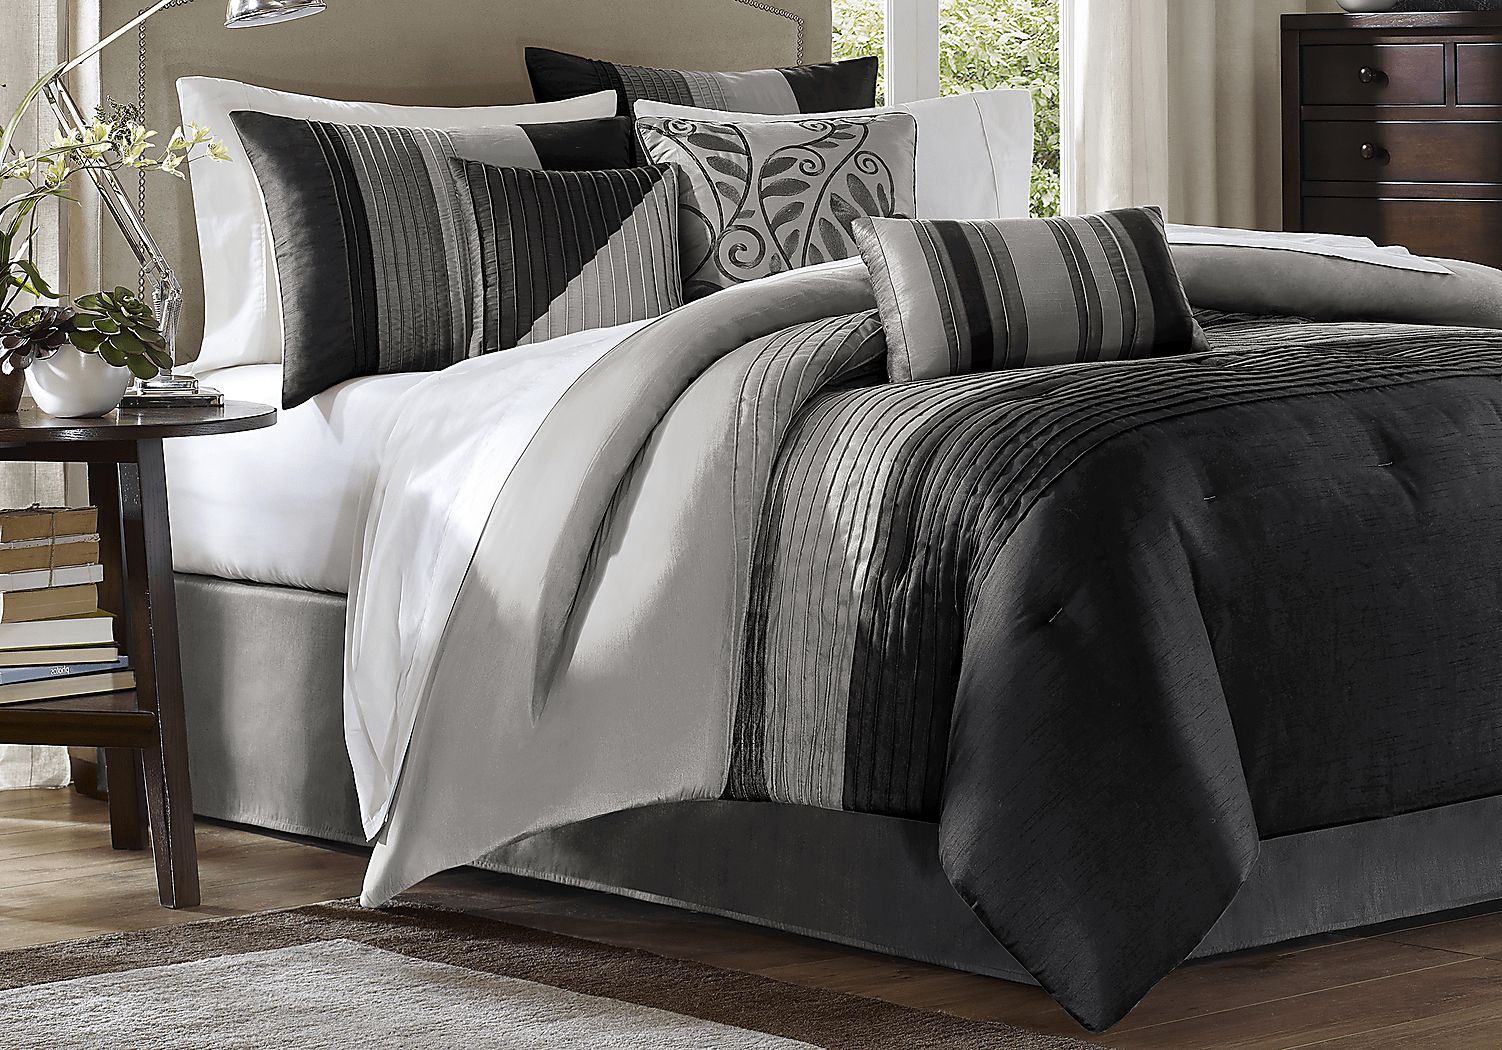 10 PCS Comforter Set Grey Black Super Soft Reversible Queen King Comforter 